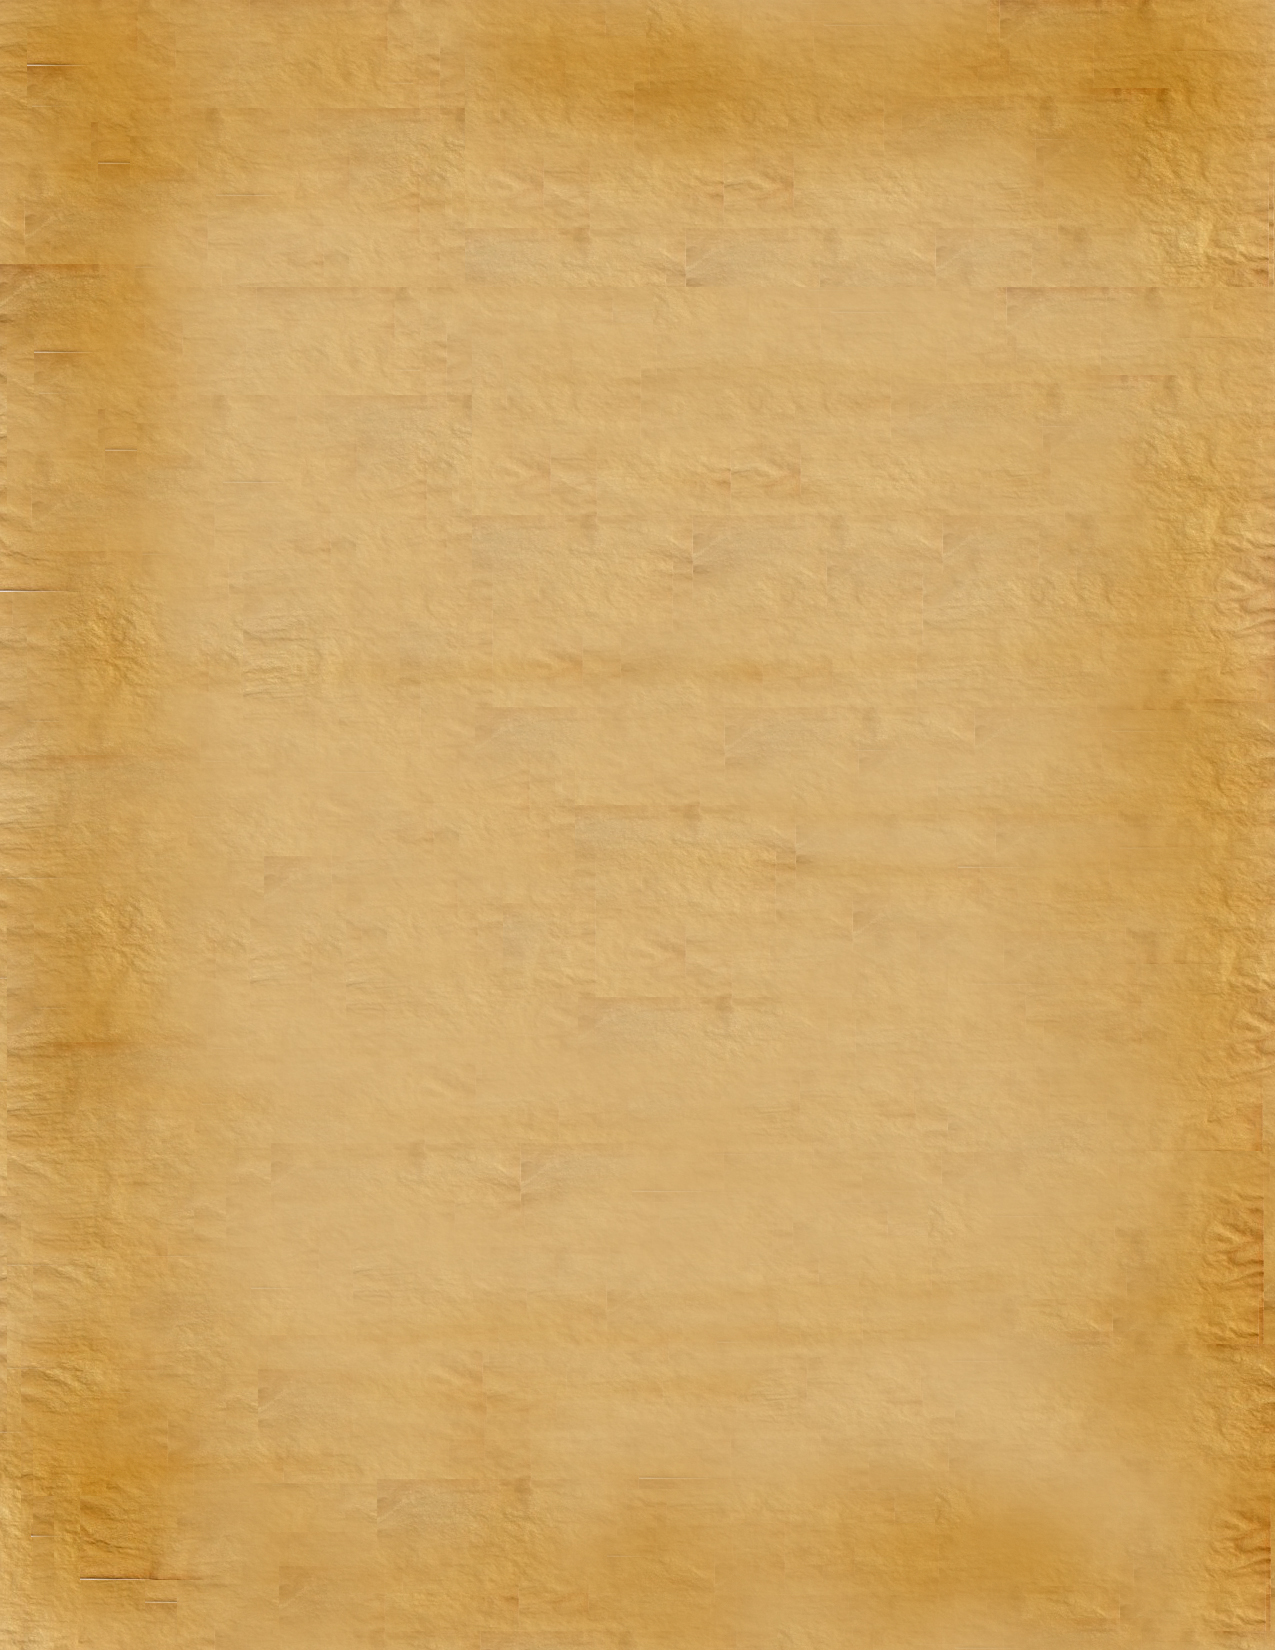 Parchment Paper Texture By Sinnedaria On DeviantArt Slides